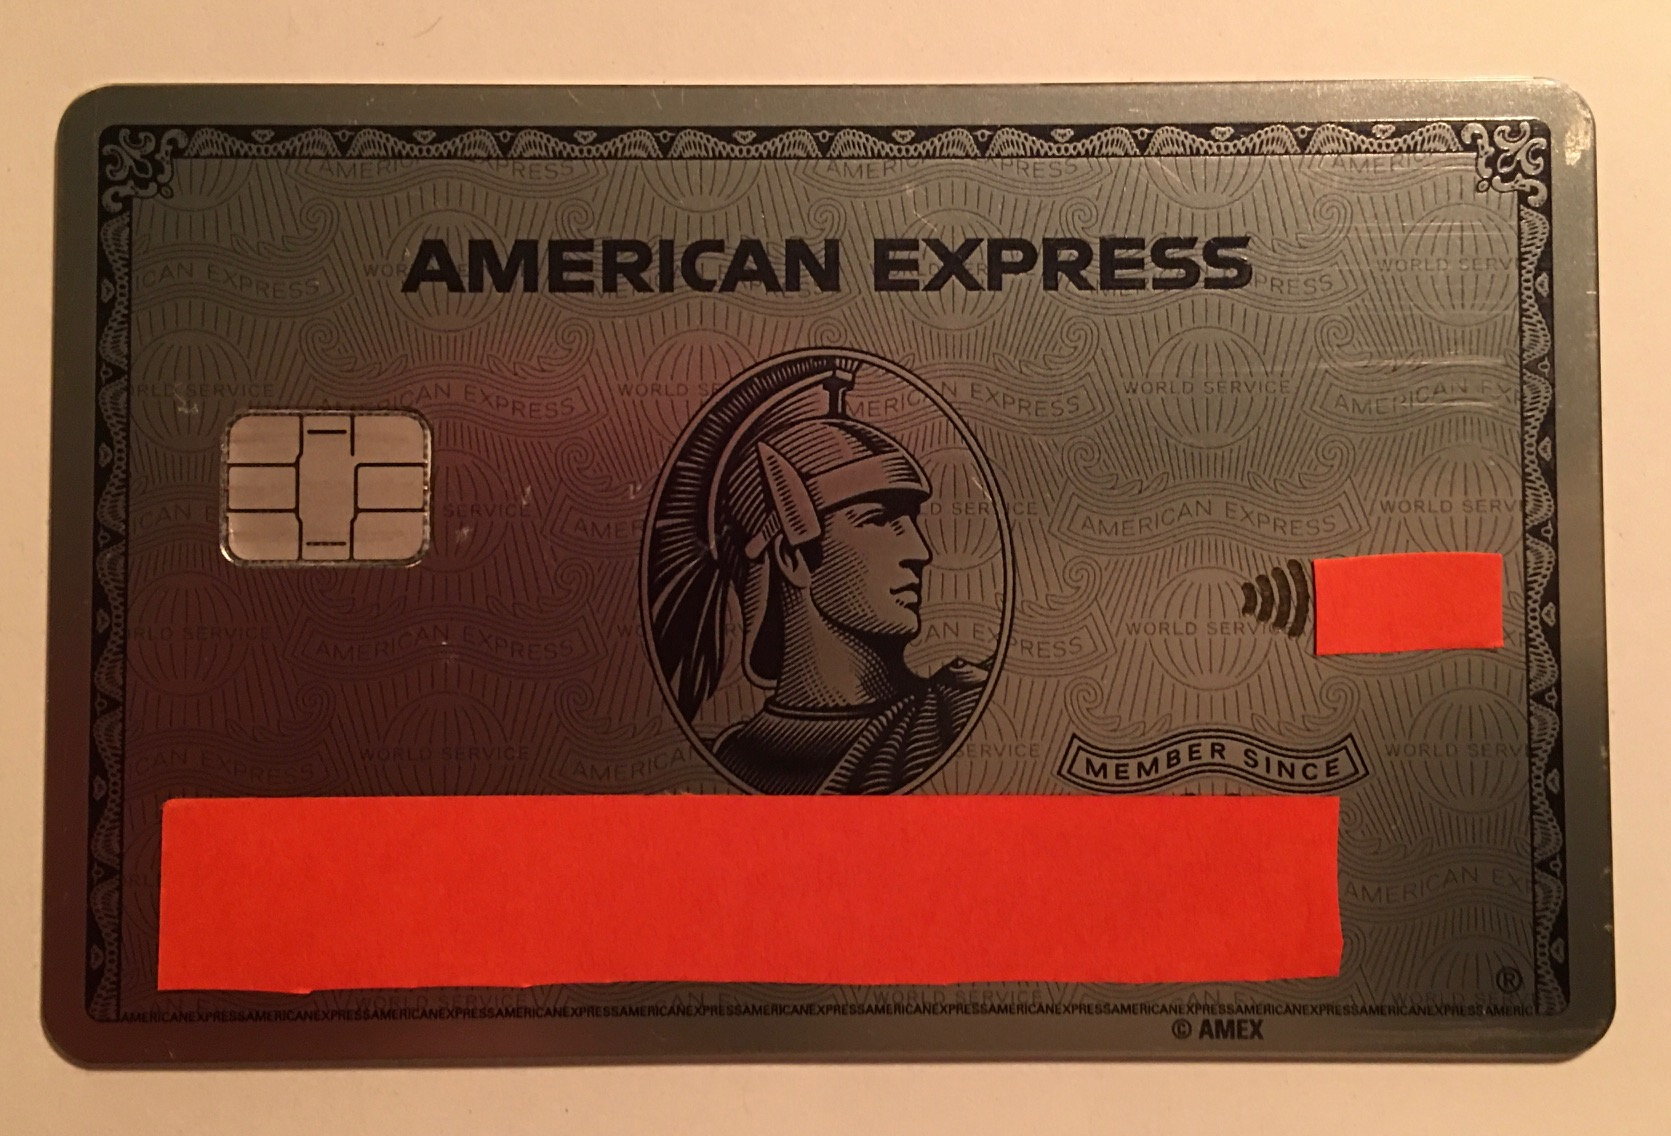 american express centurion card bin number